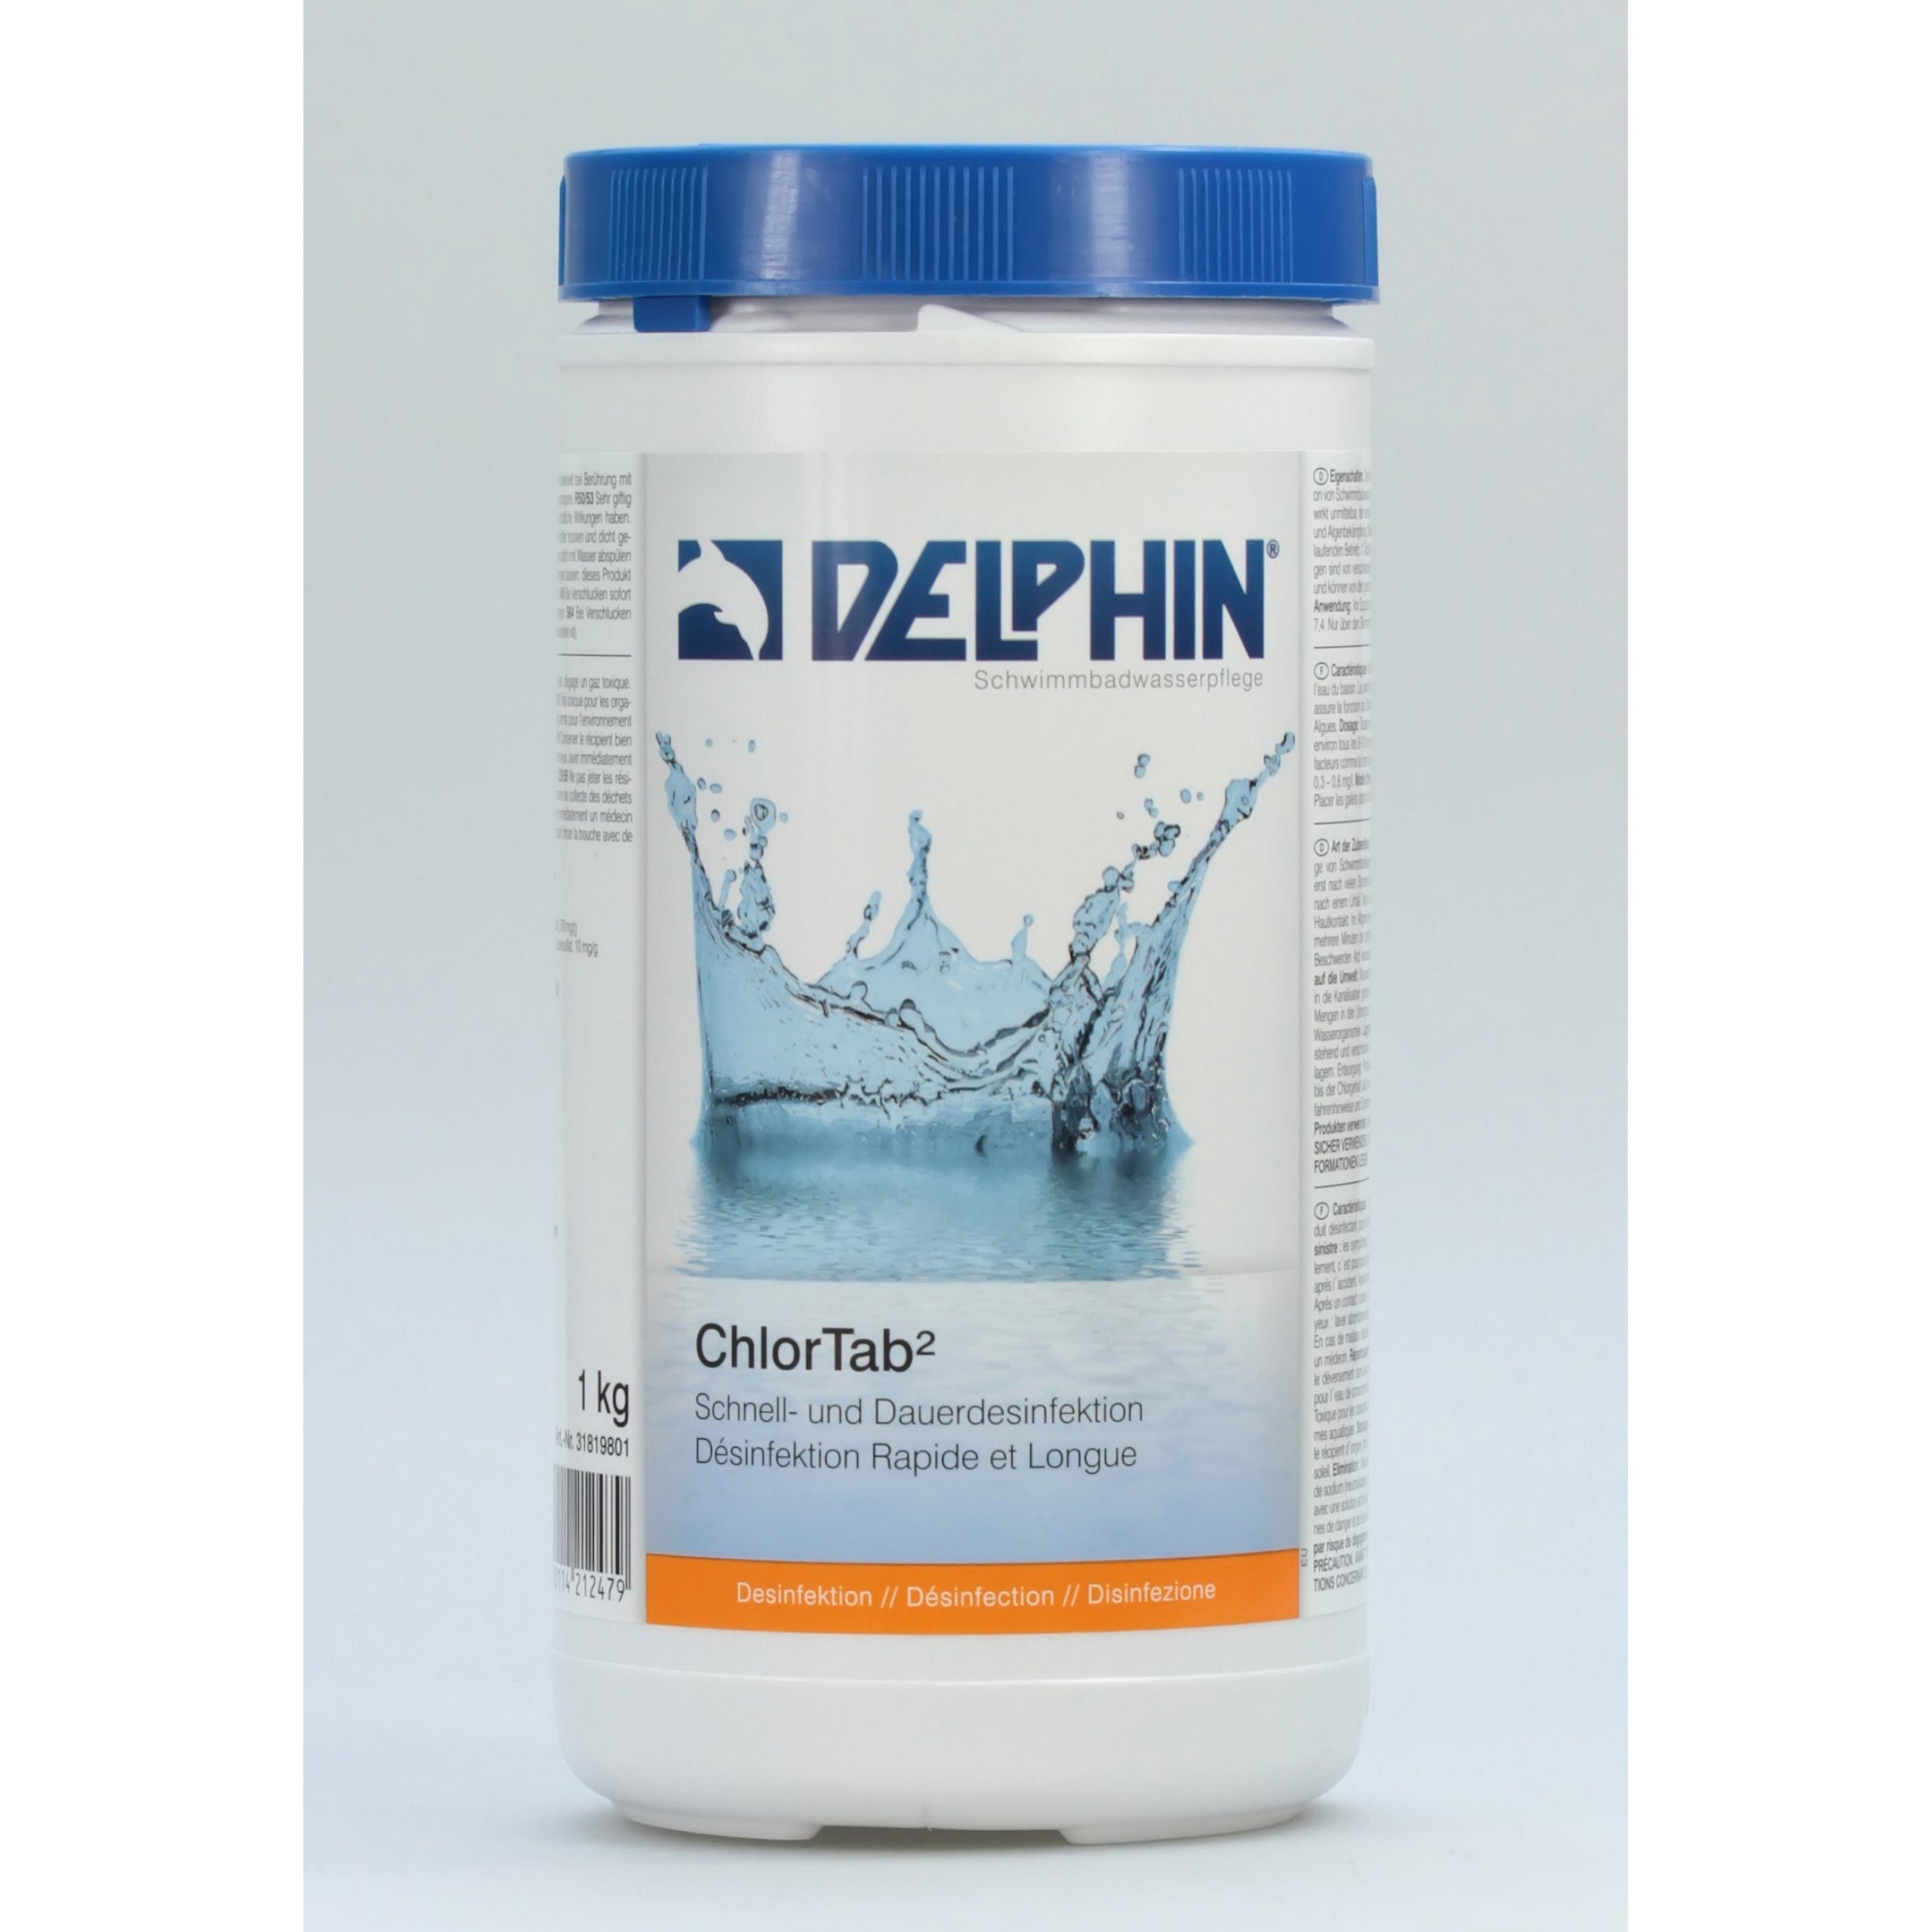 Chemoform Poolpflege Delphin Chlor Tab² 250g Tablette 1 kg Schnelldesinfektion